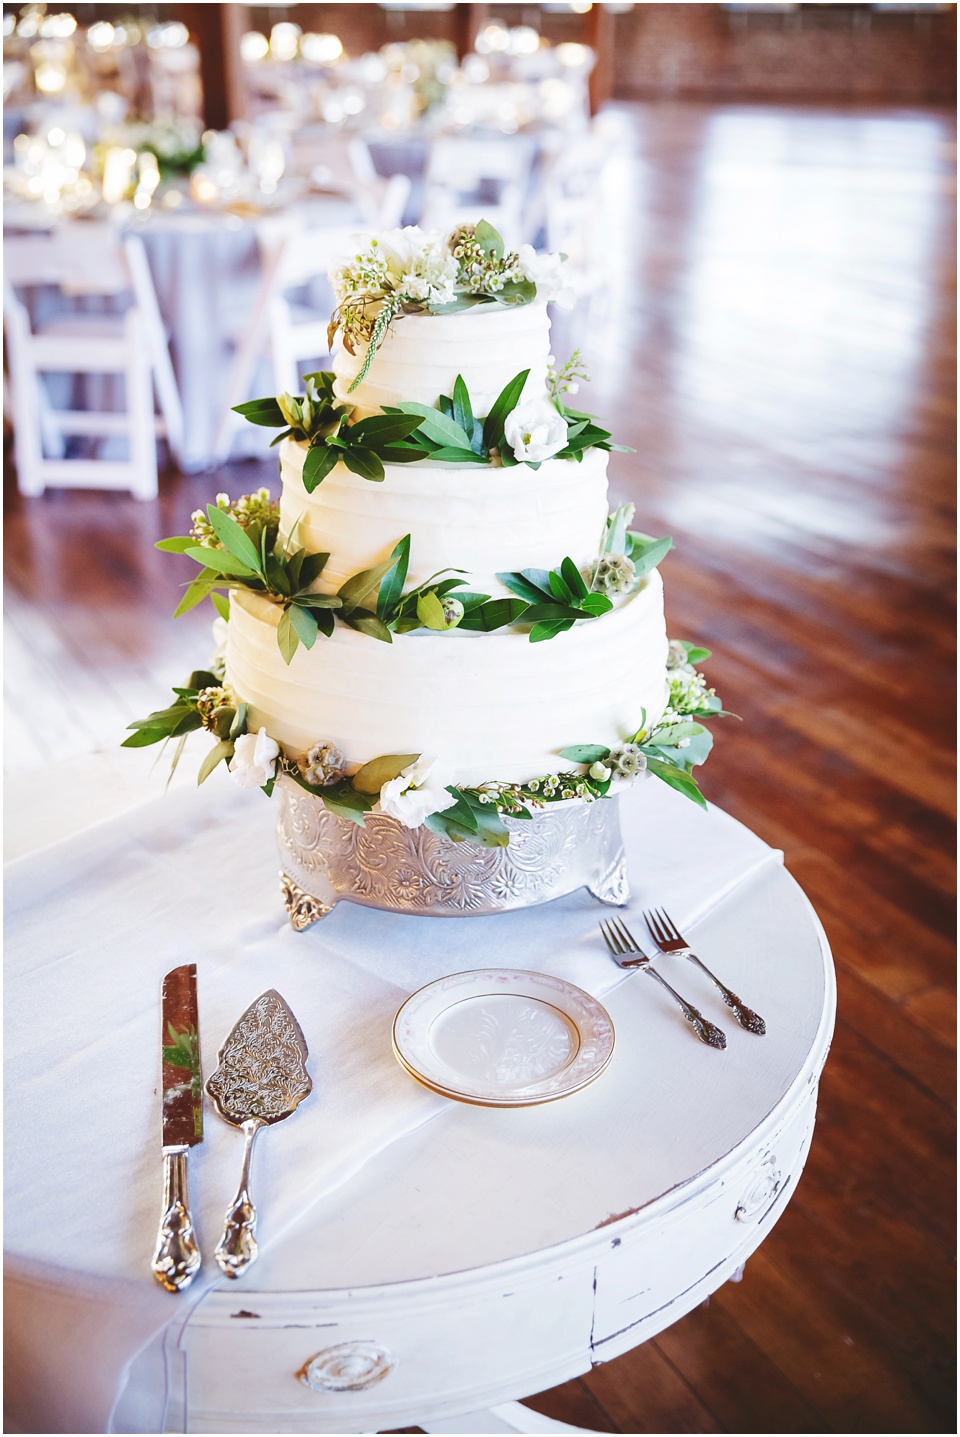 classic wedding photography, Central Illinois wedding reception cake details